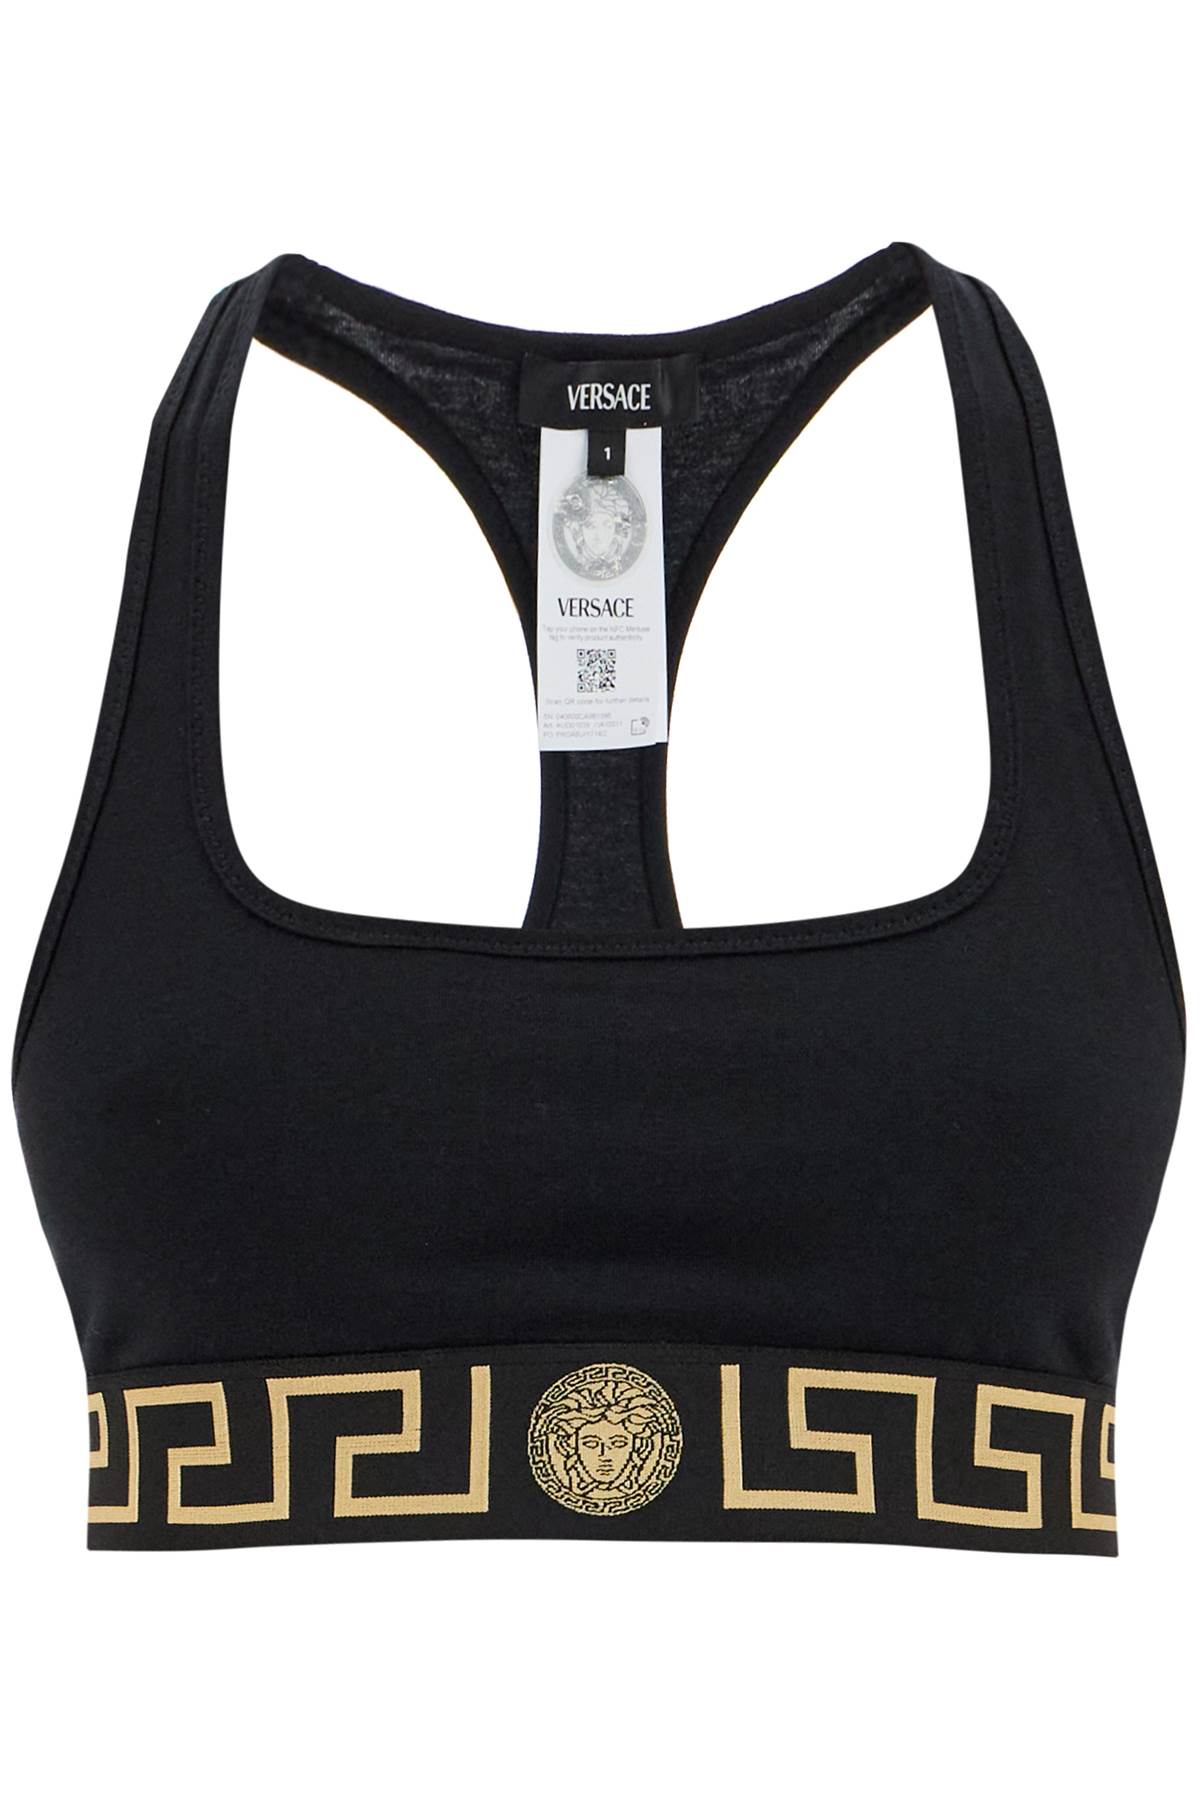 Versace VERSACE sports bra with greca motif